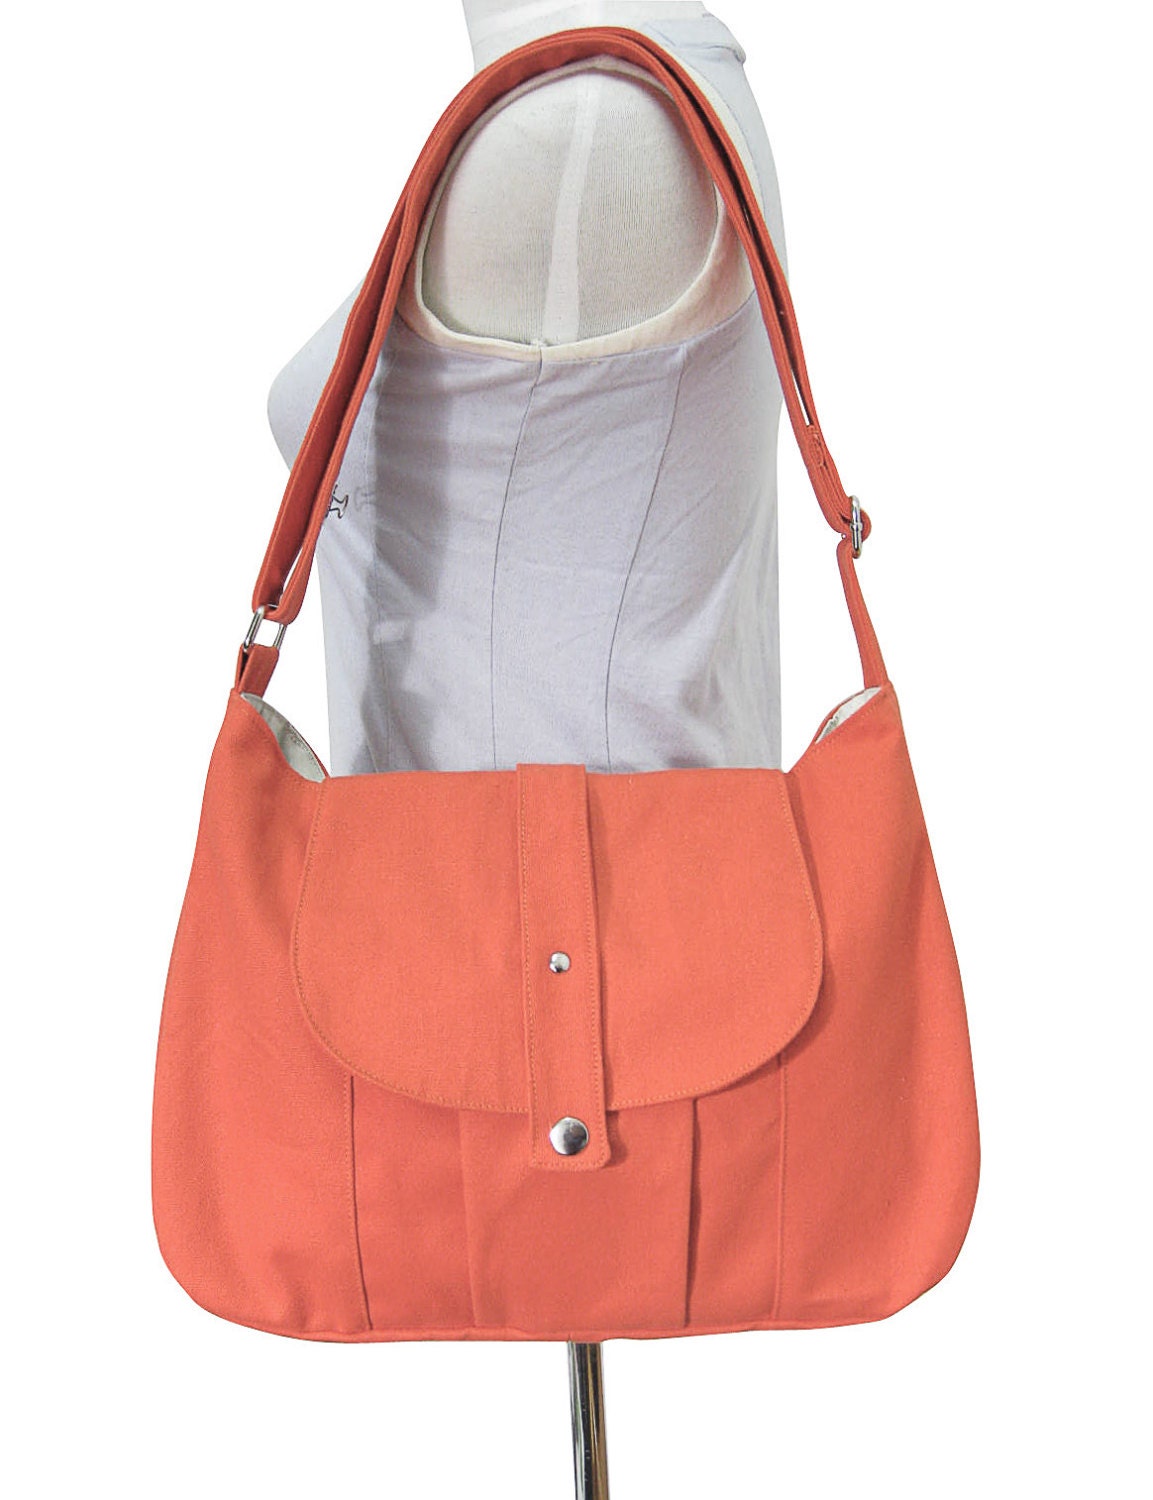 orange cotton canvas purse / shoulder bag / by Markfabric on Etsy